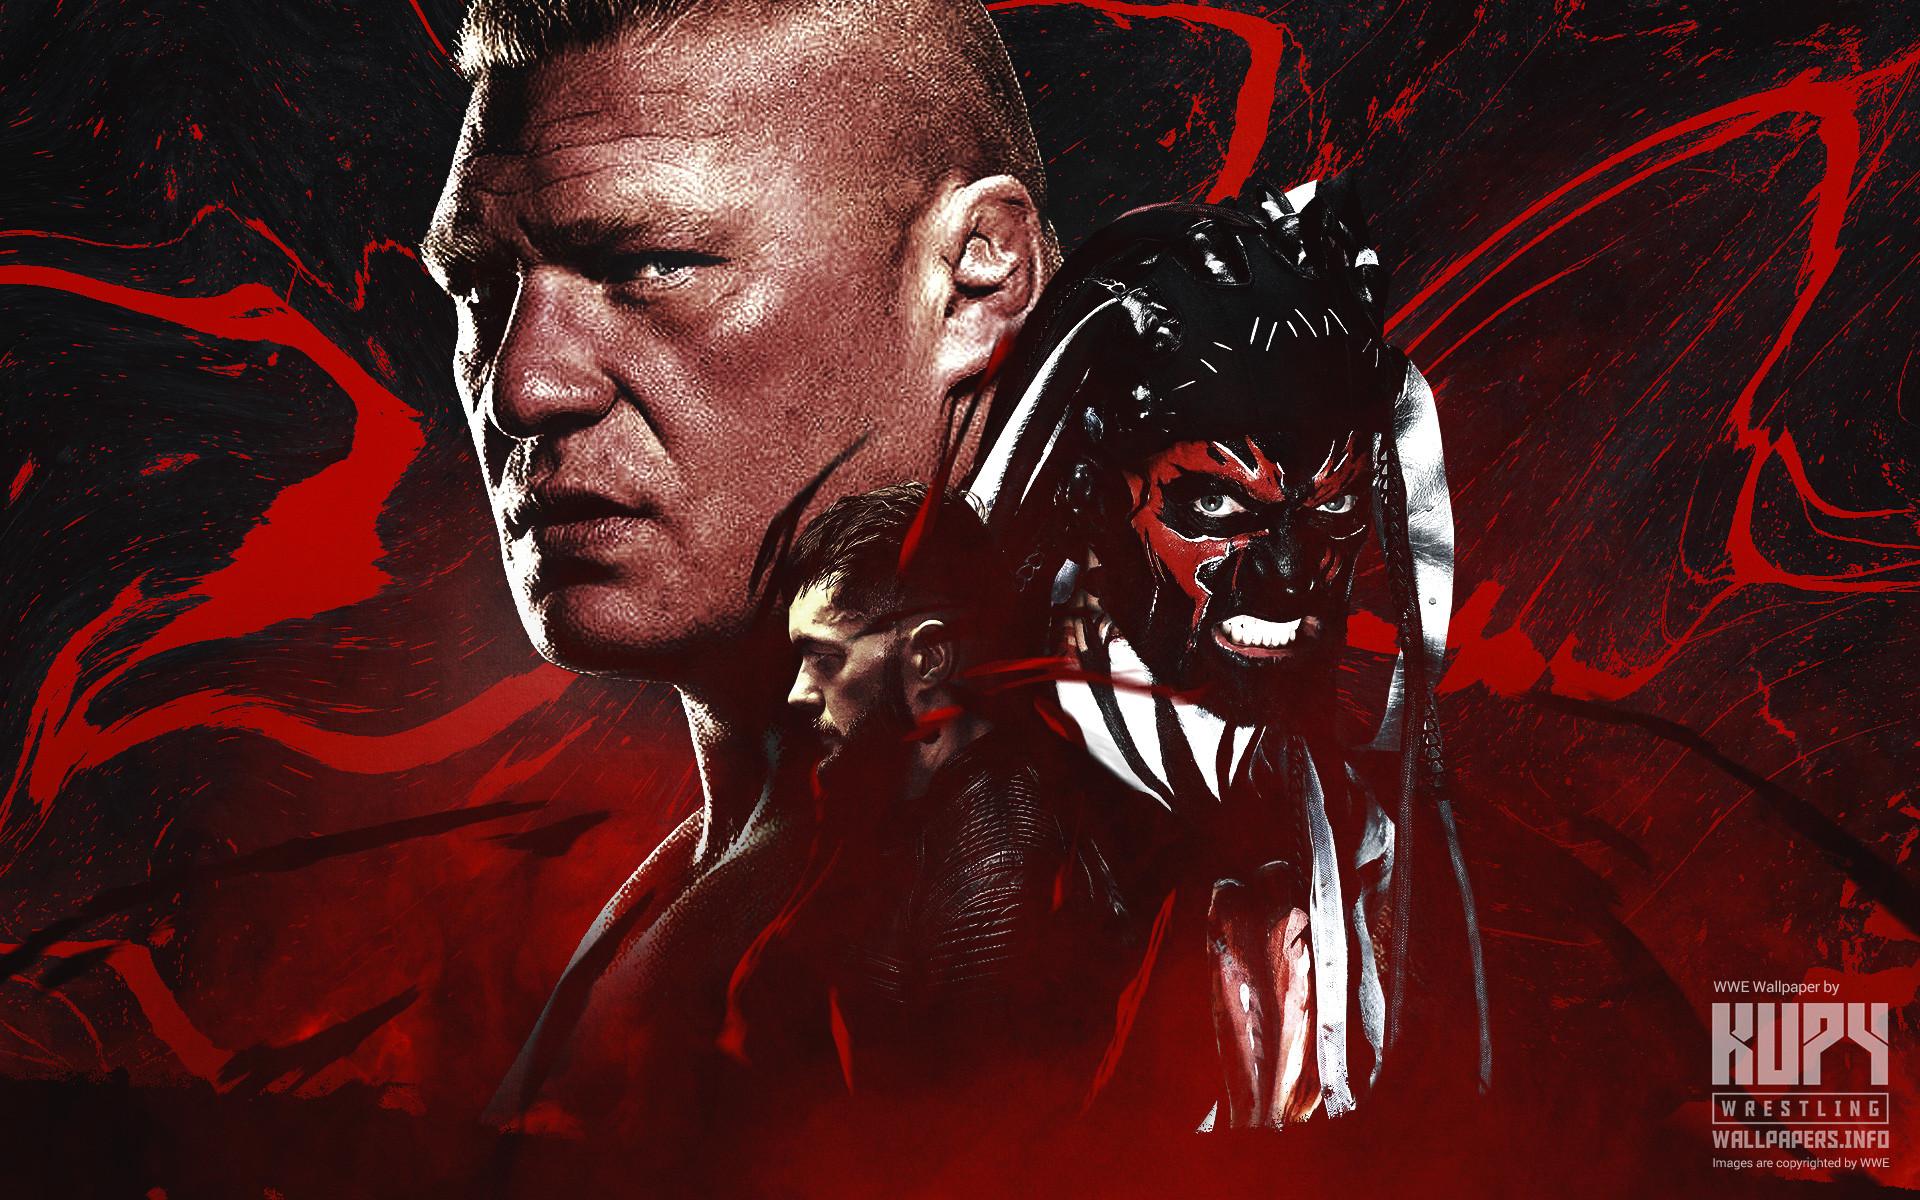 Royal Rumble 2019: Finn Balor vs. Brock Lesnar (c) WWE Universal